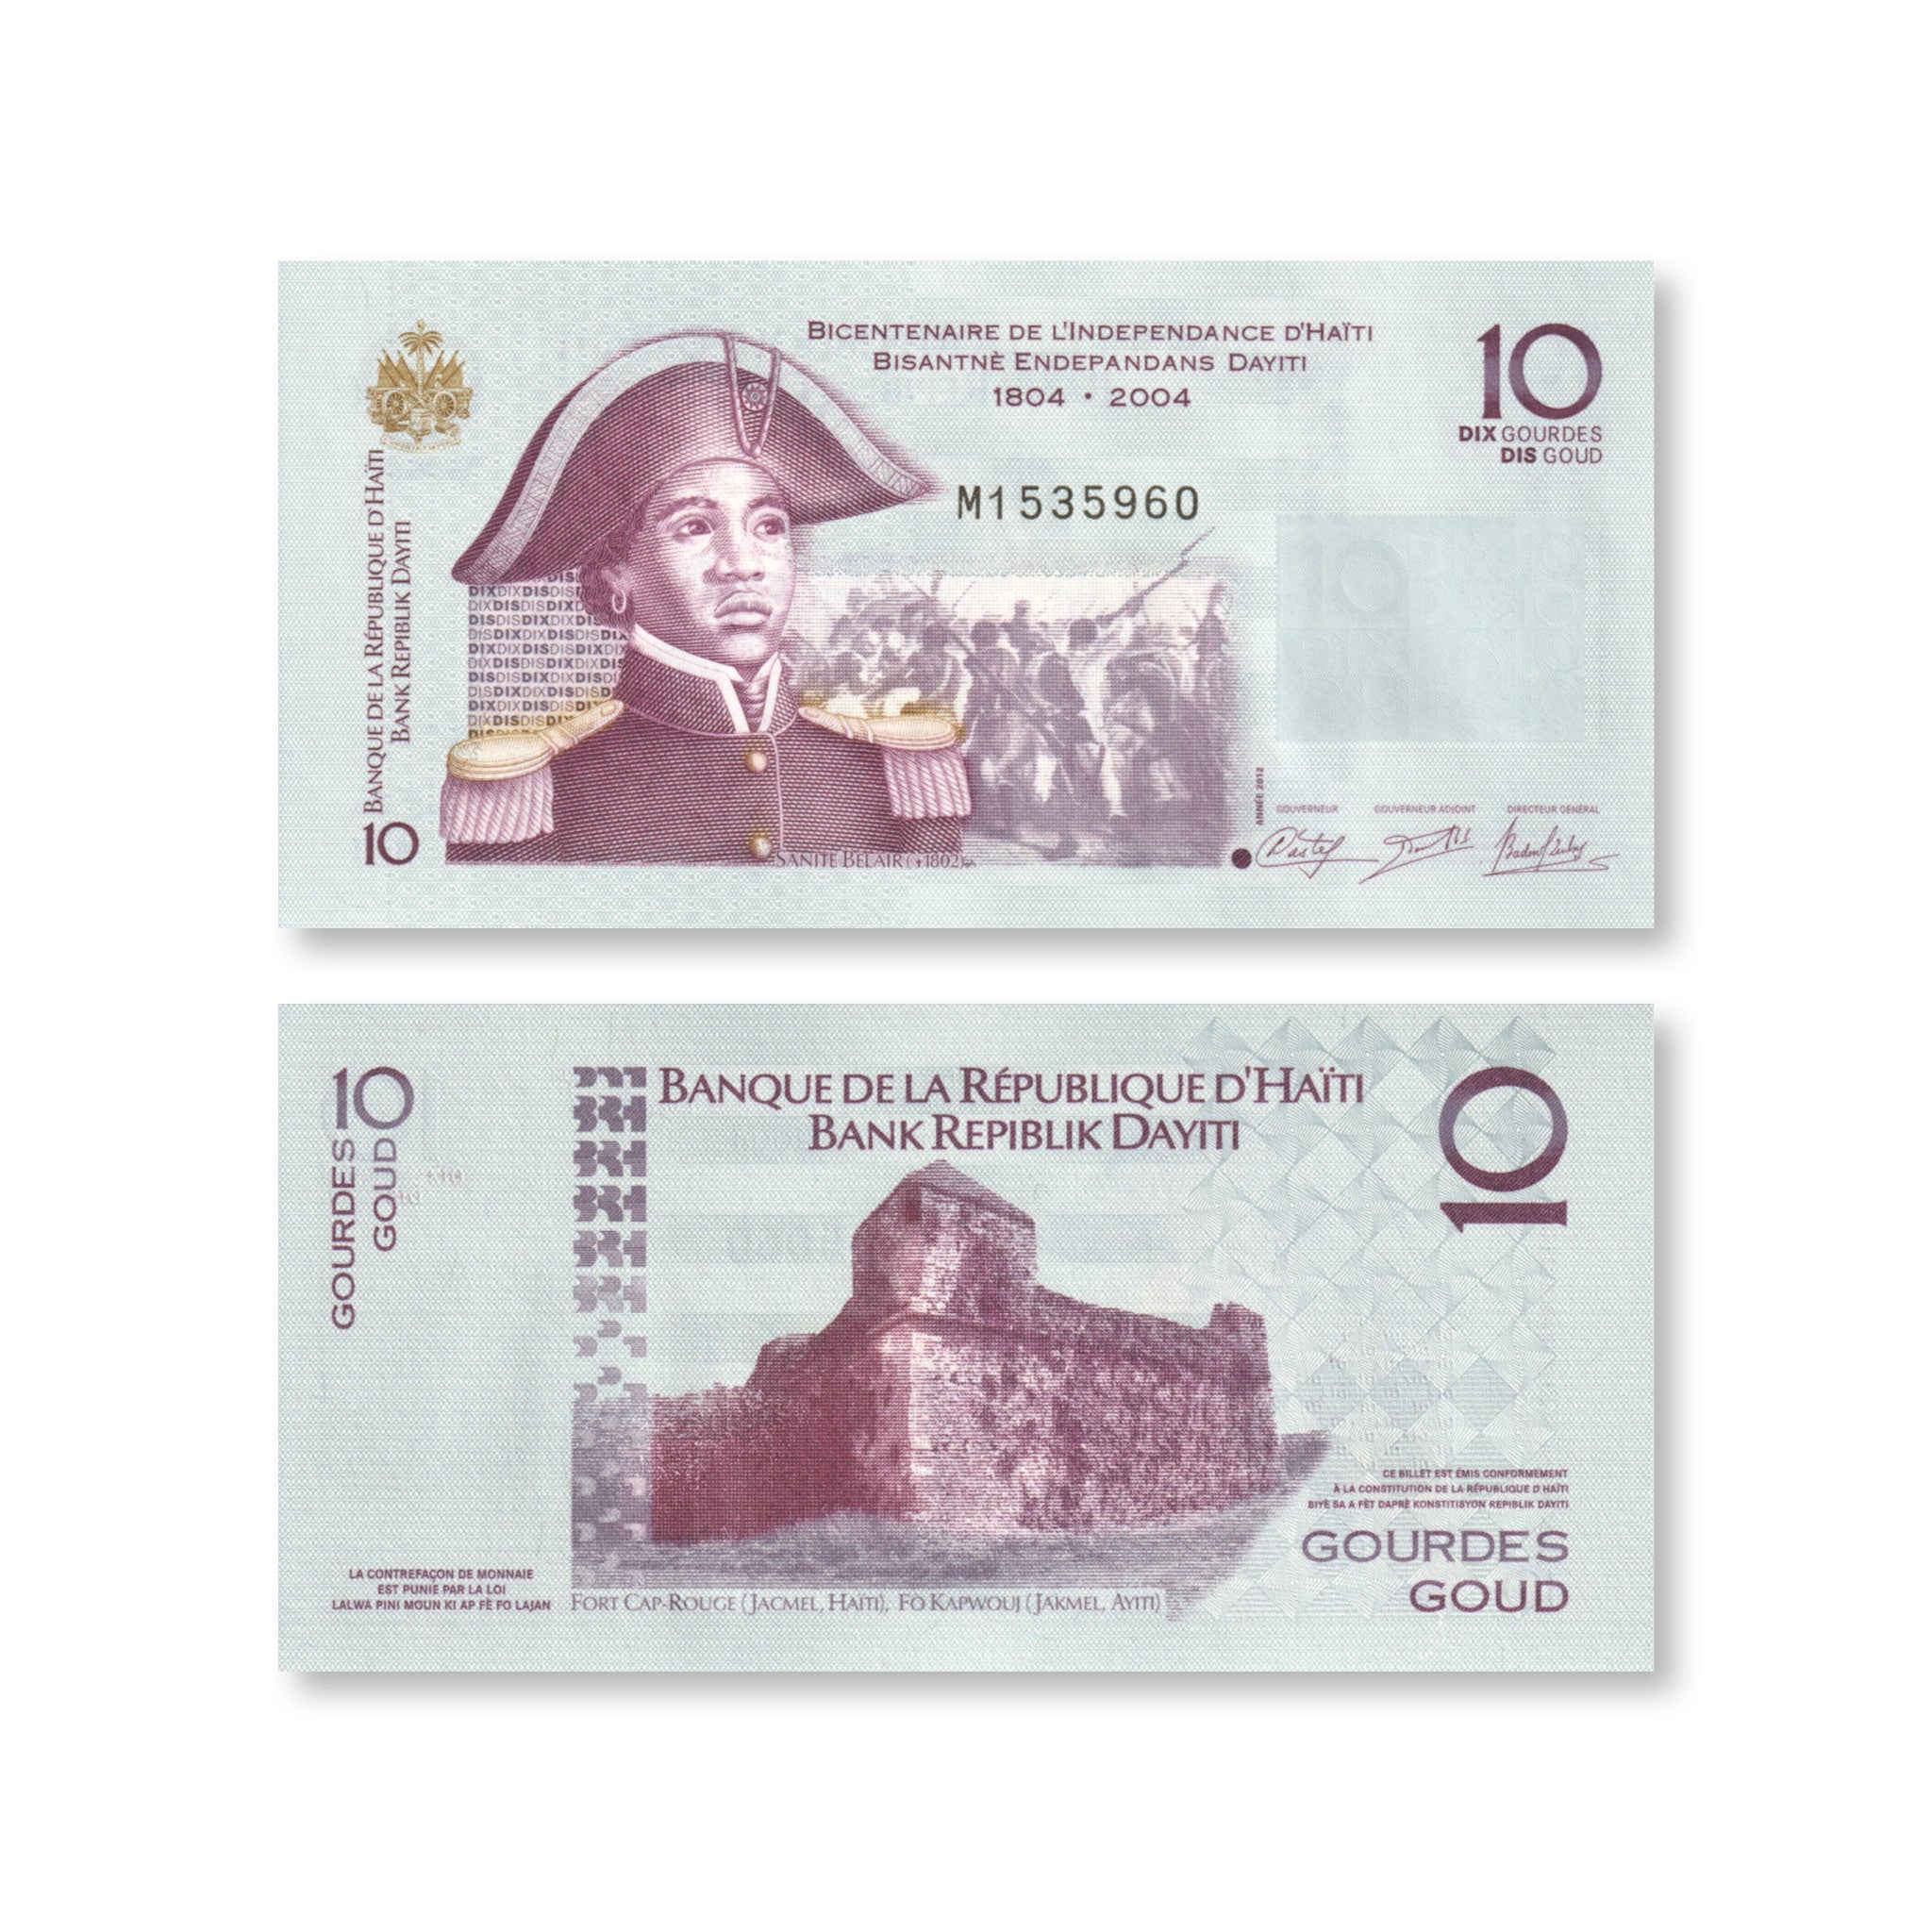 Haiti 10 Gourdes, 2012, B845e, P272e, UNC - Robert's World Money - World Banknotes